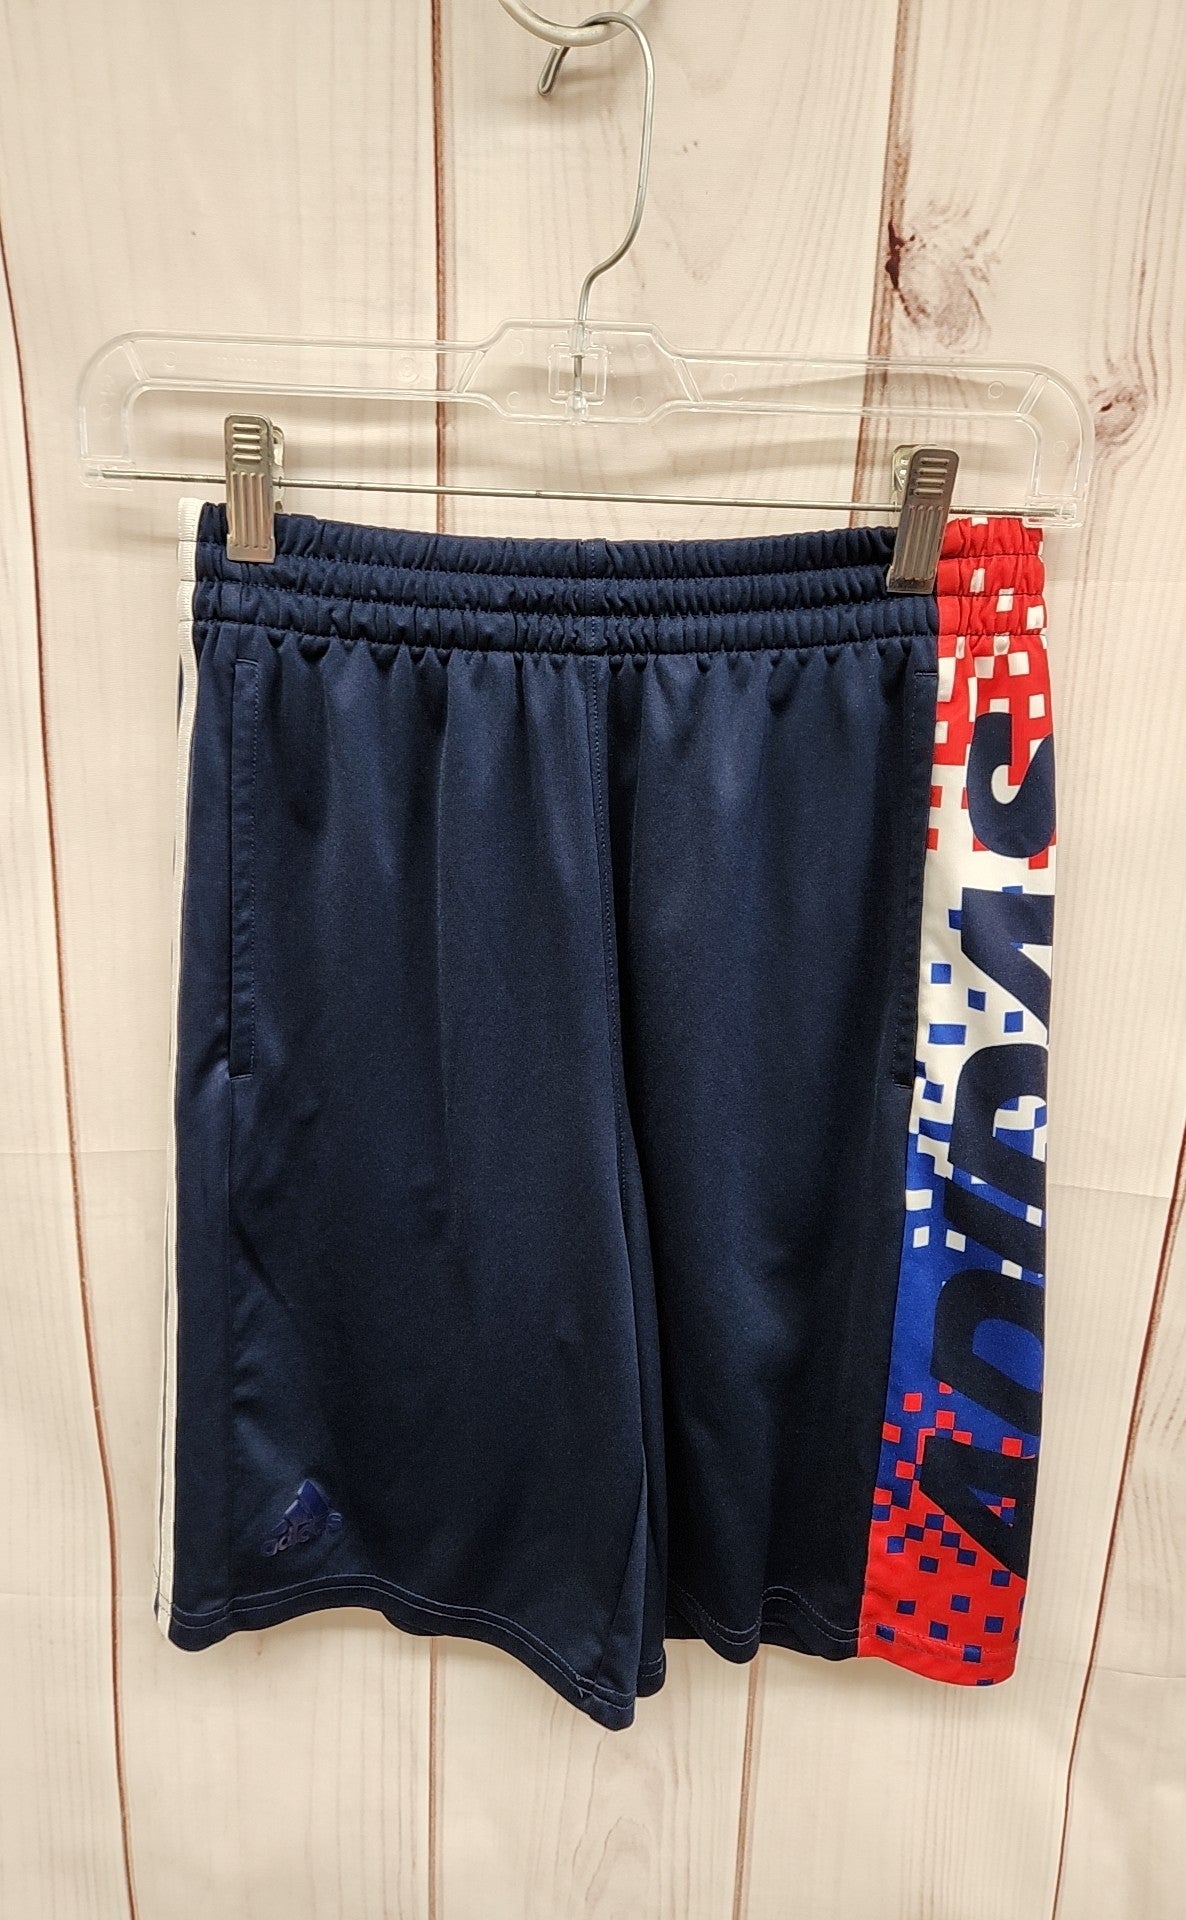 Adidas Boy's Size 14/16 Navy Shorts